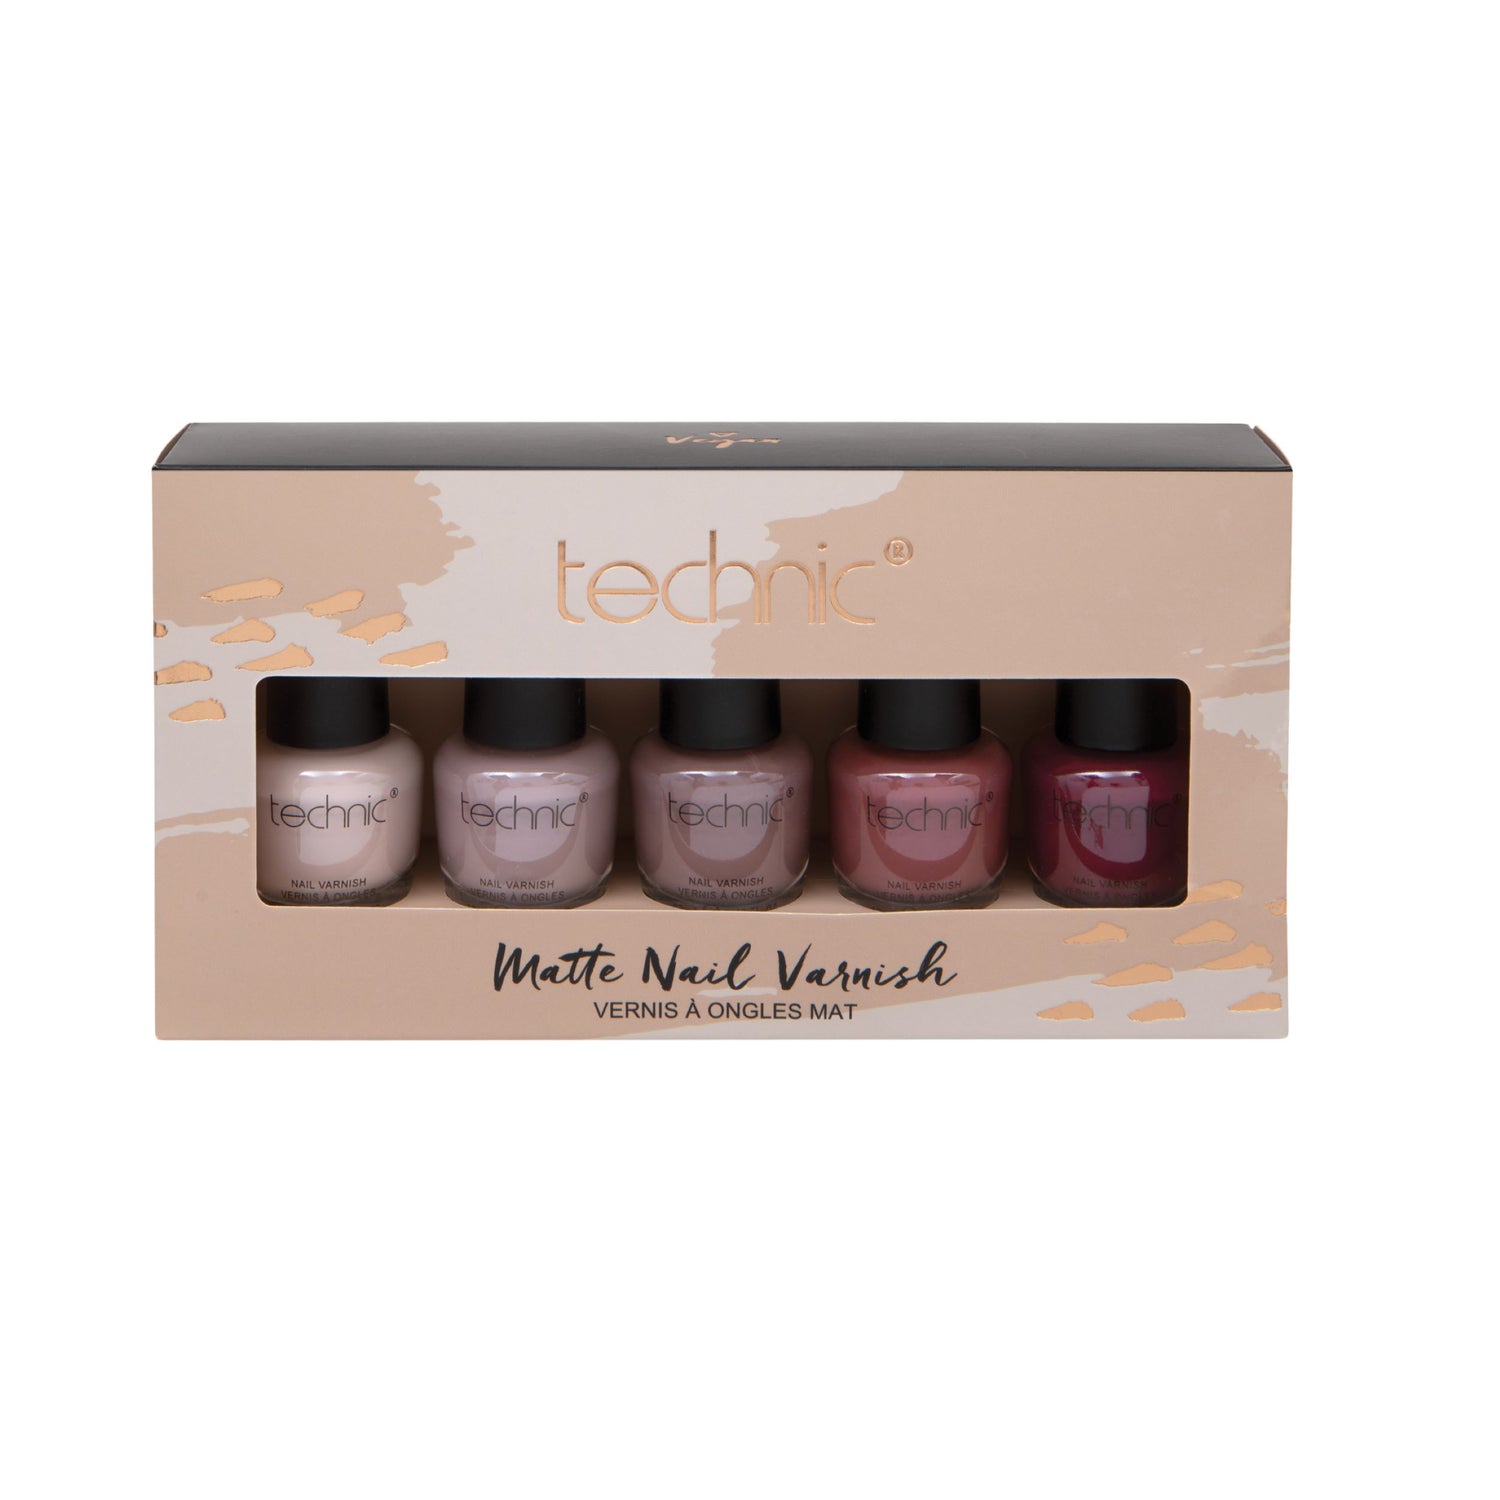 Technic Cosmetics - Set of 5 nail polishes Matte Nail Varnish by badgequo